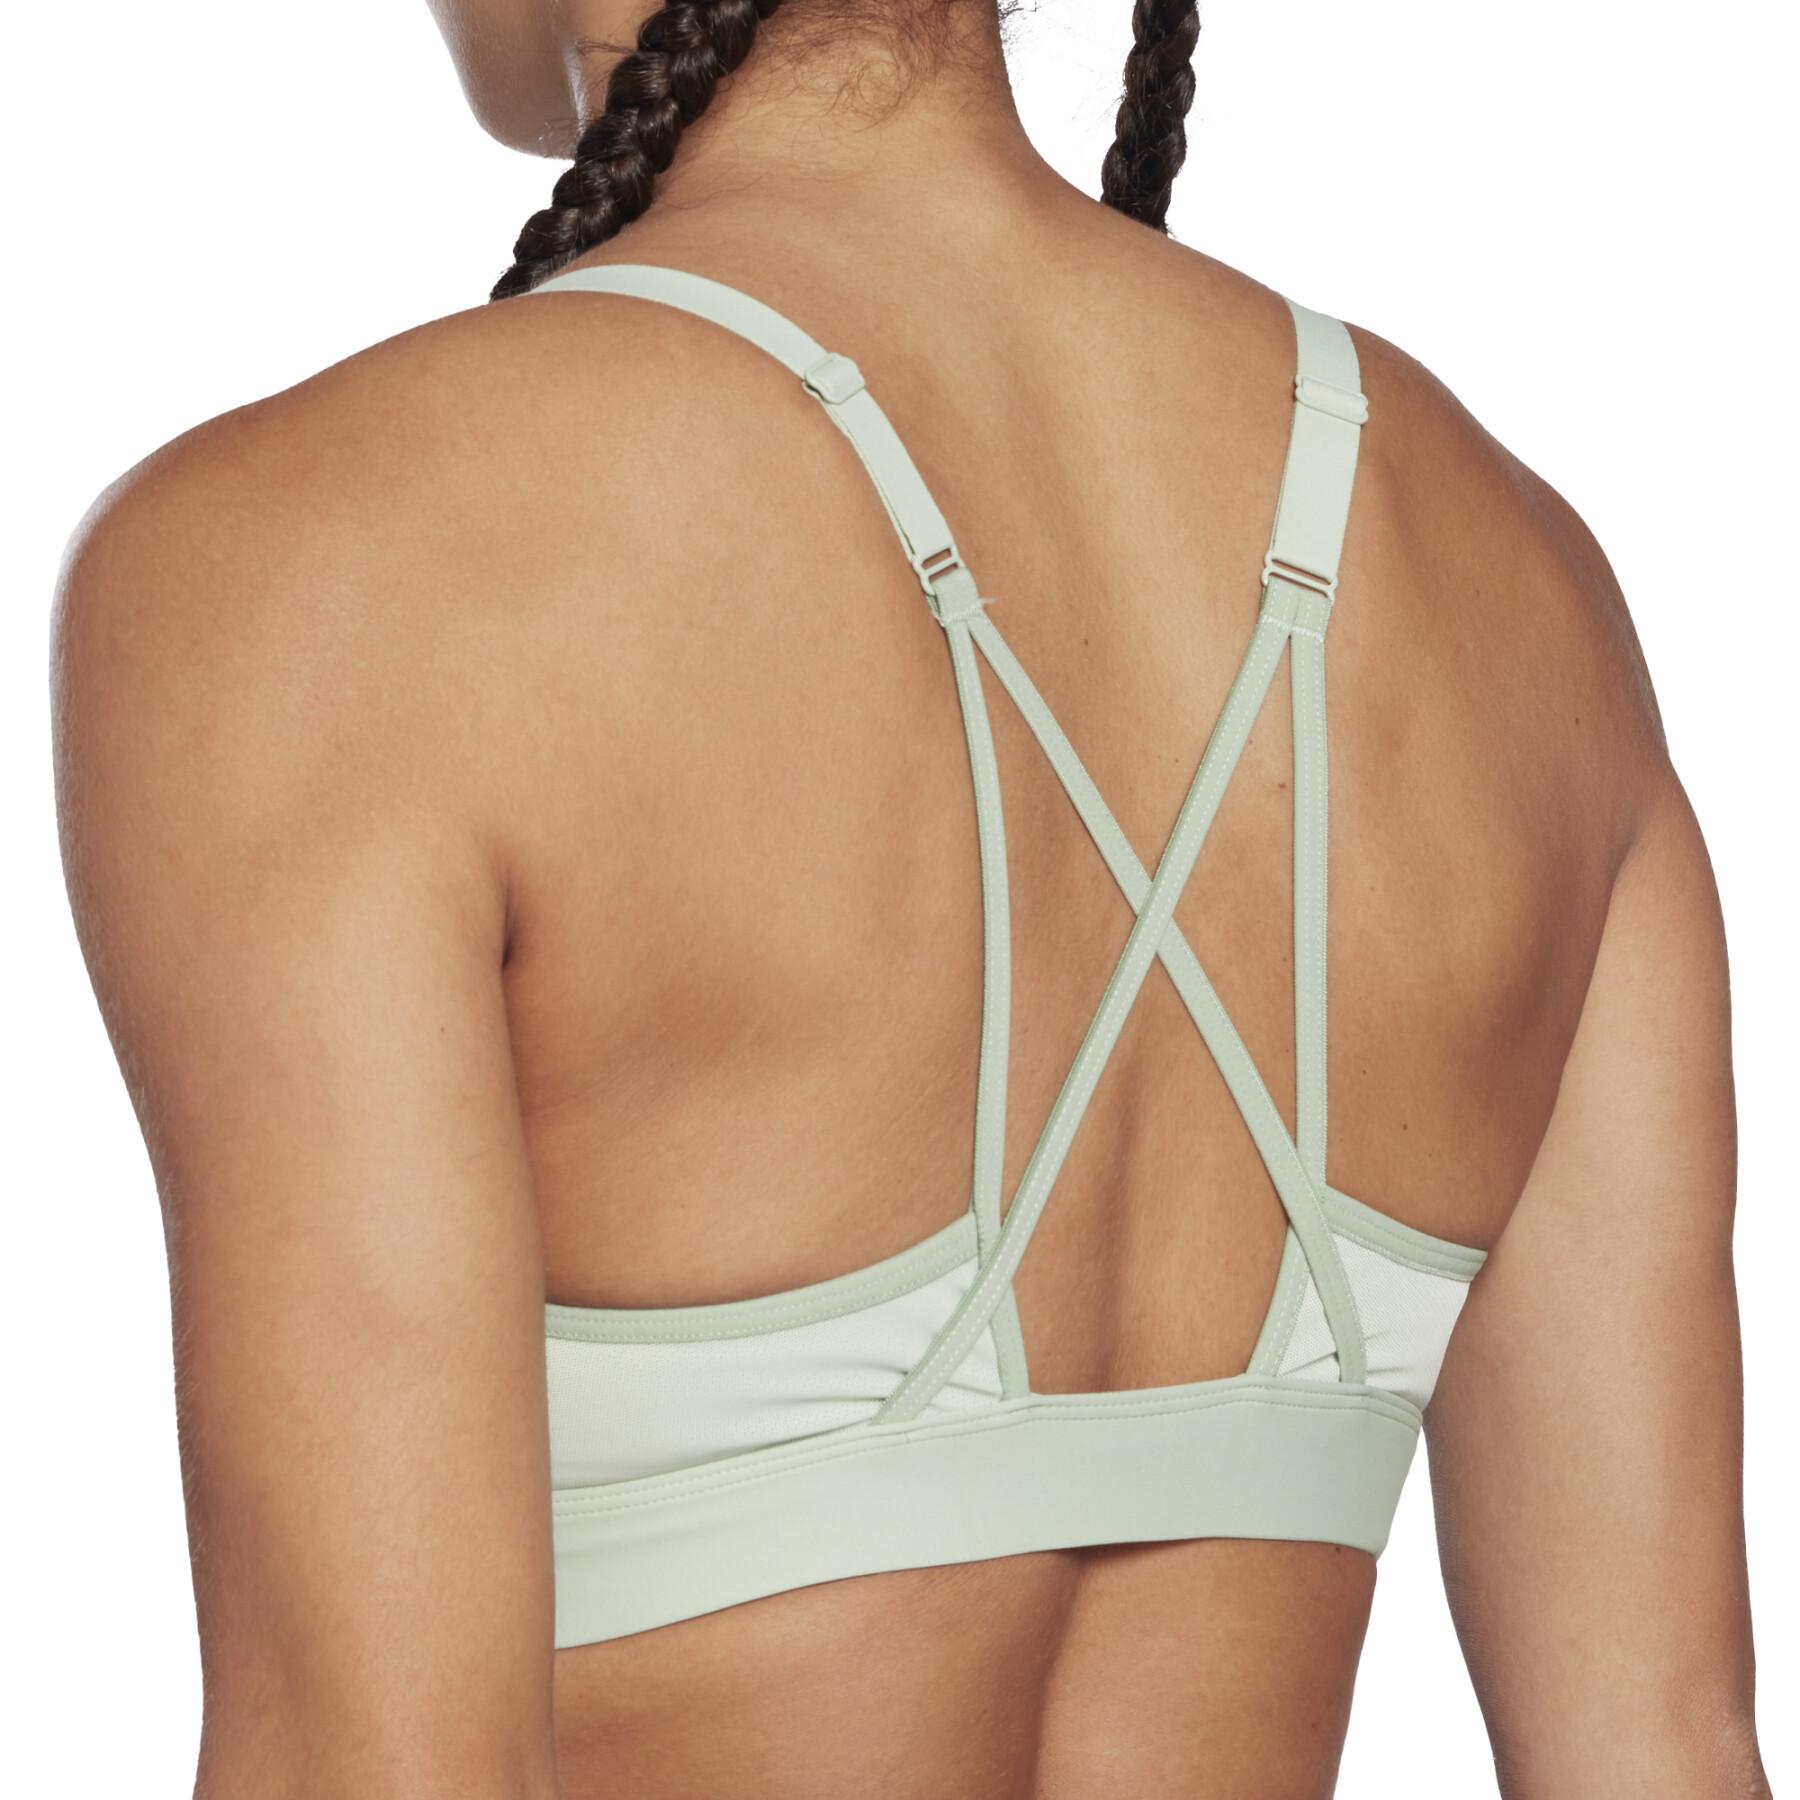 Women's bra Reebok Lux Strappy Sports